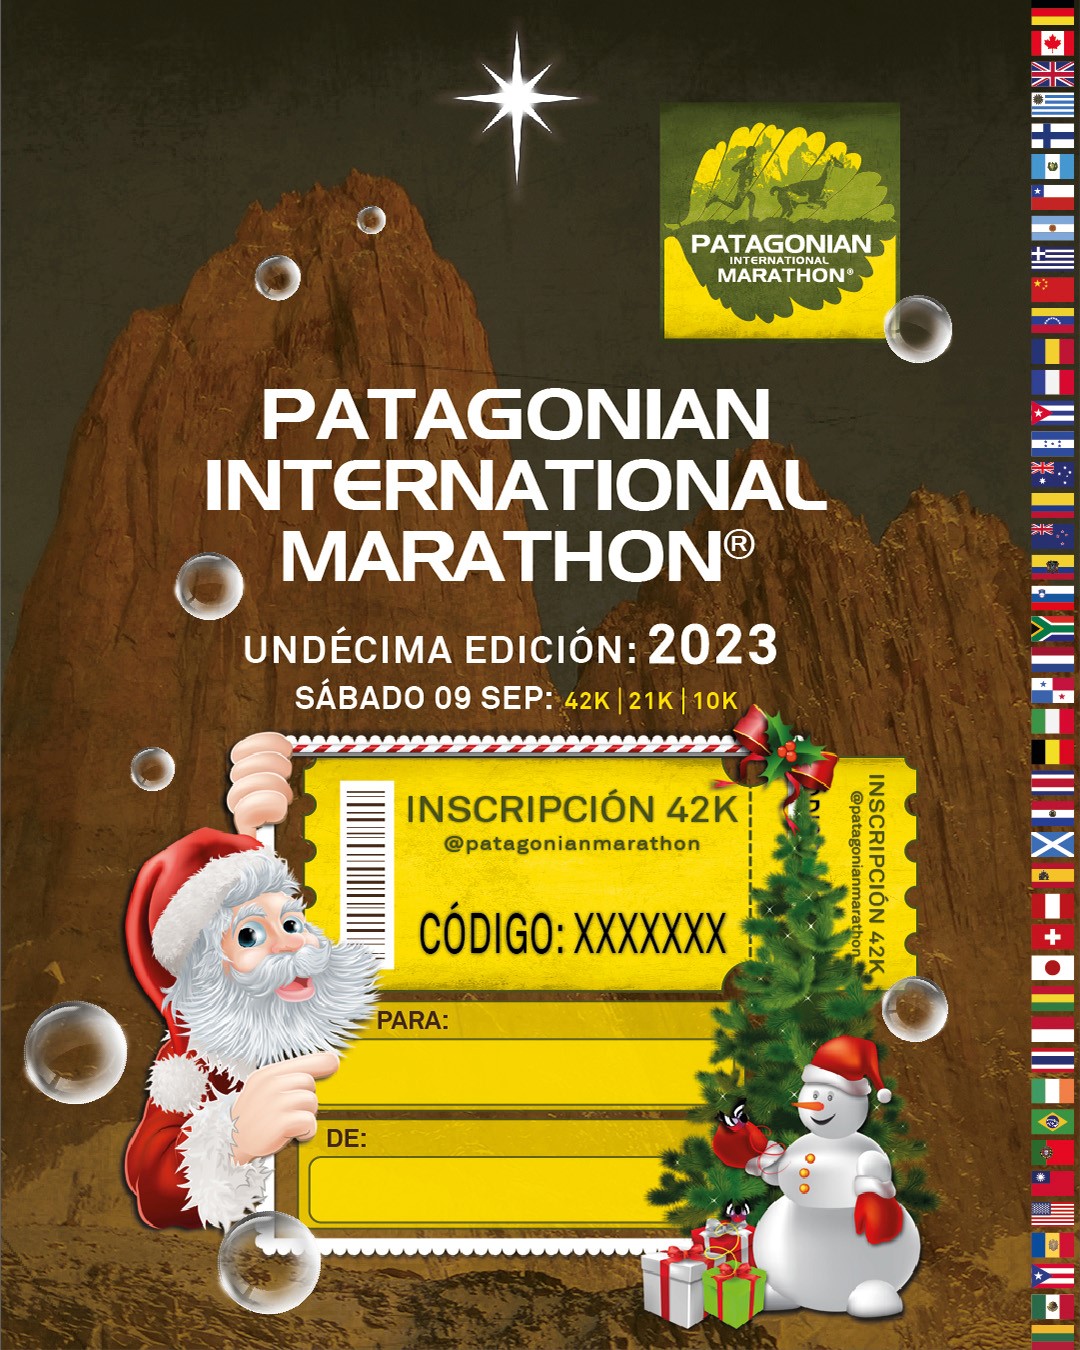 Gift a Registration Patagonian International Marathon 2023